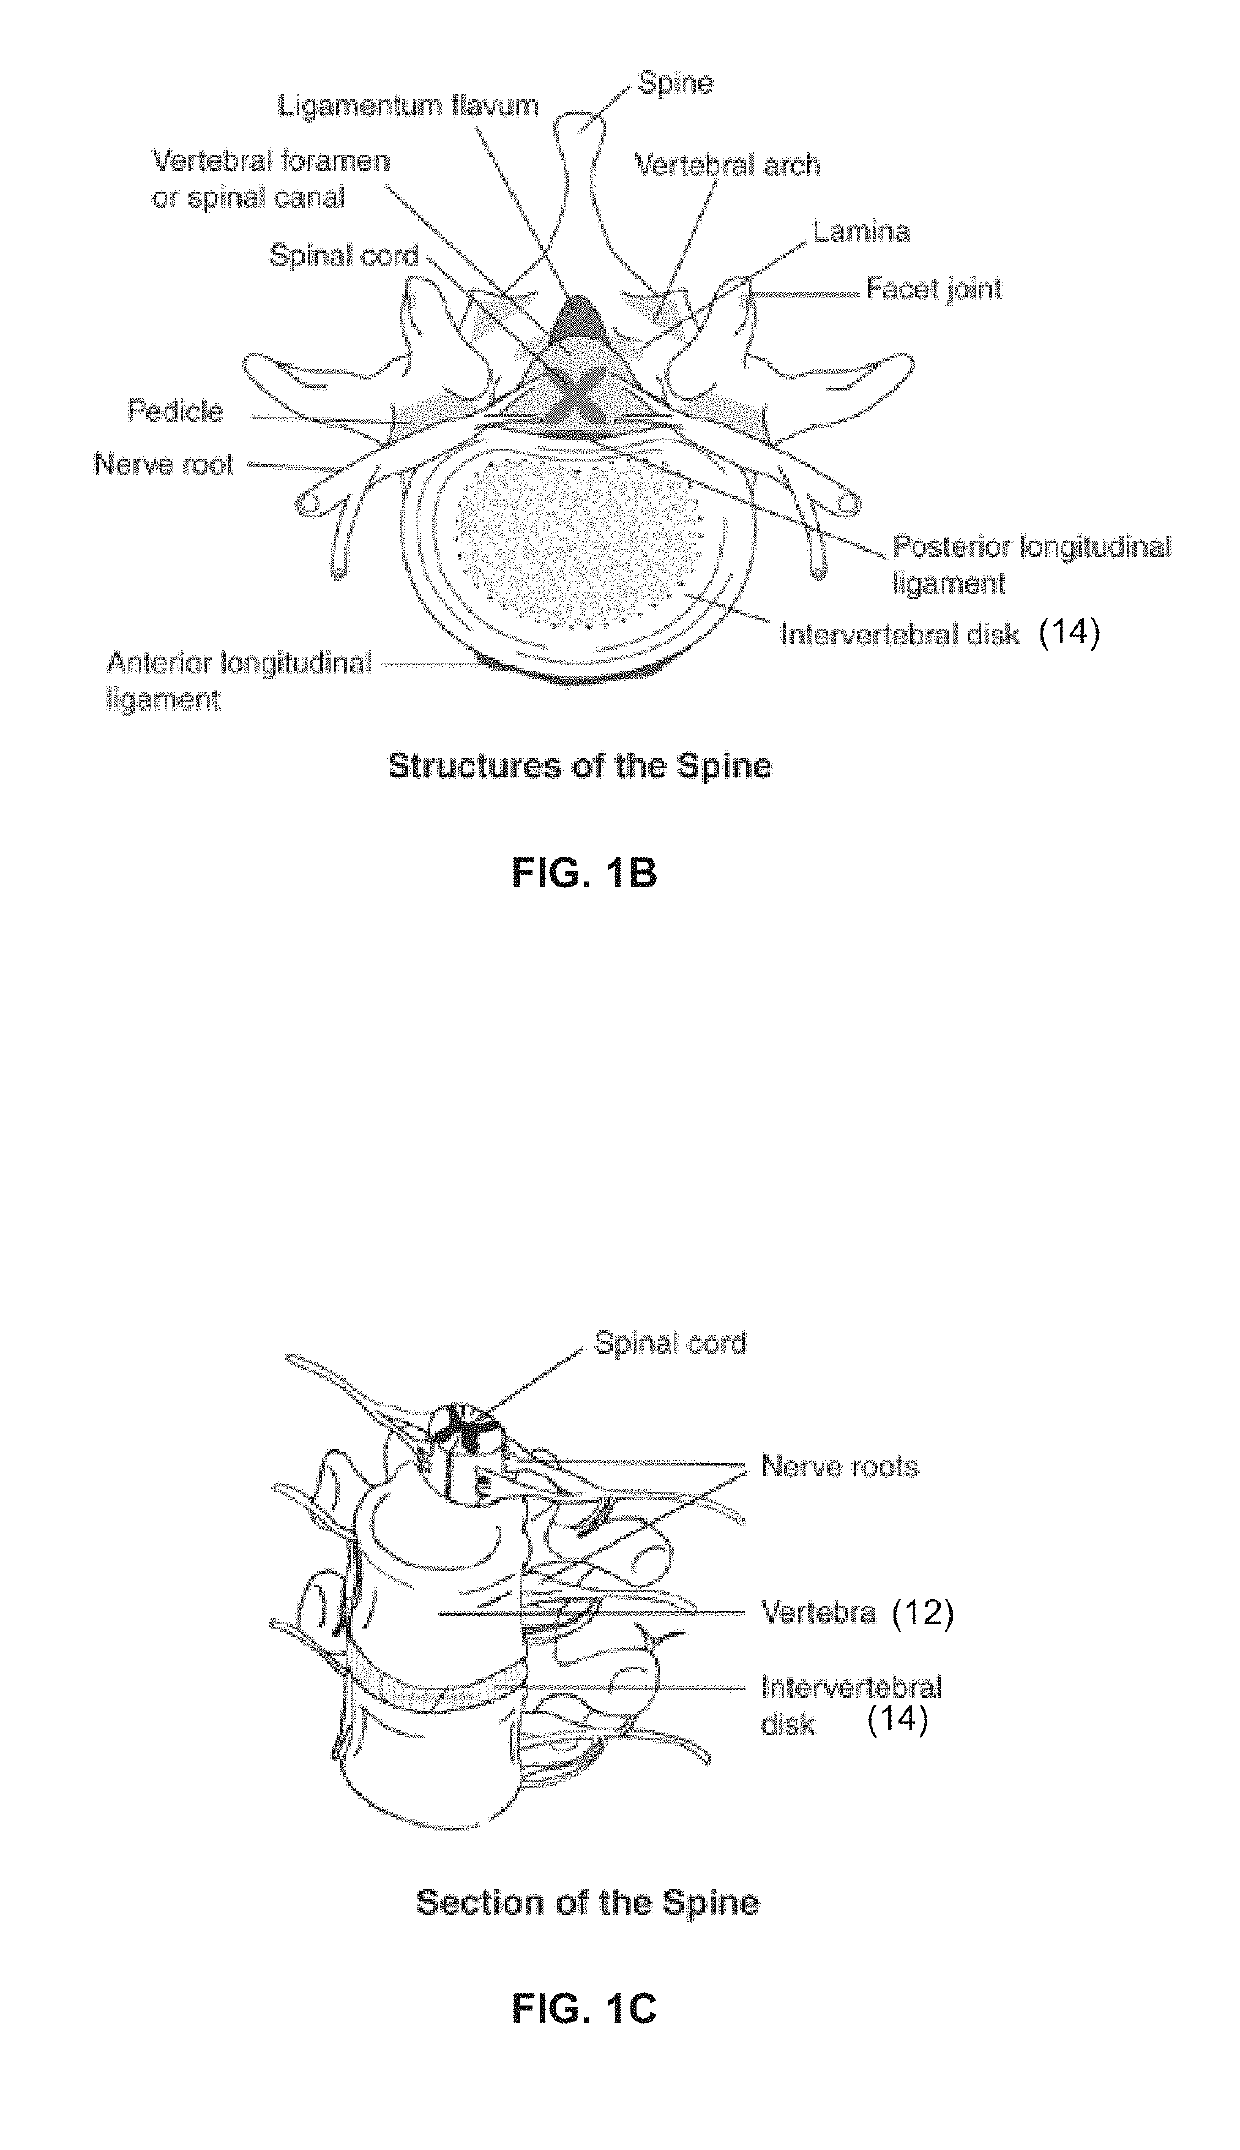 Apparatus, kit, and method for percutaneous intervertebral disc restoration